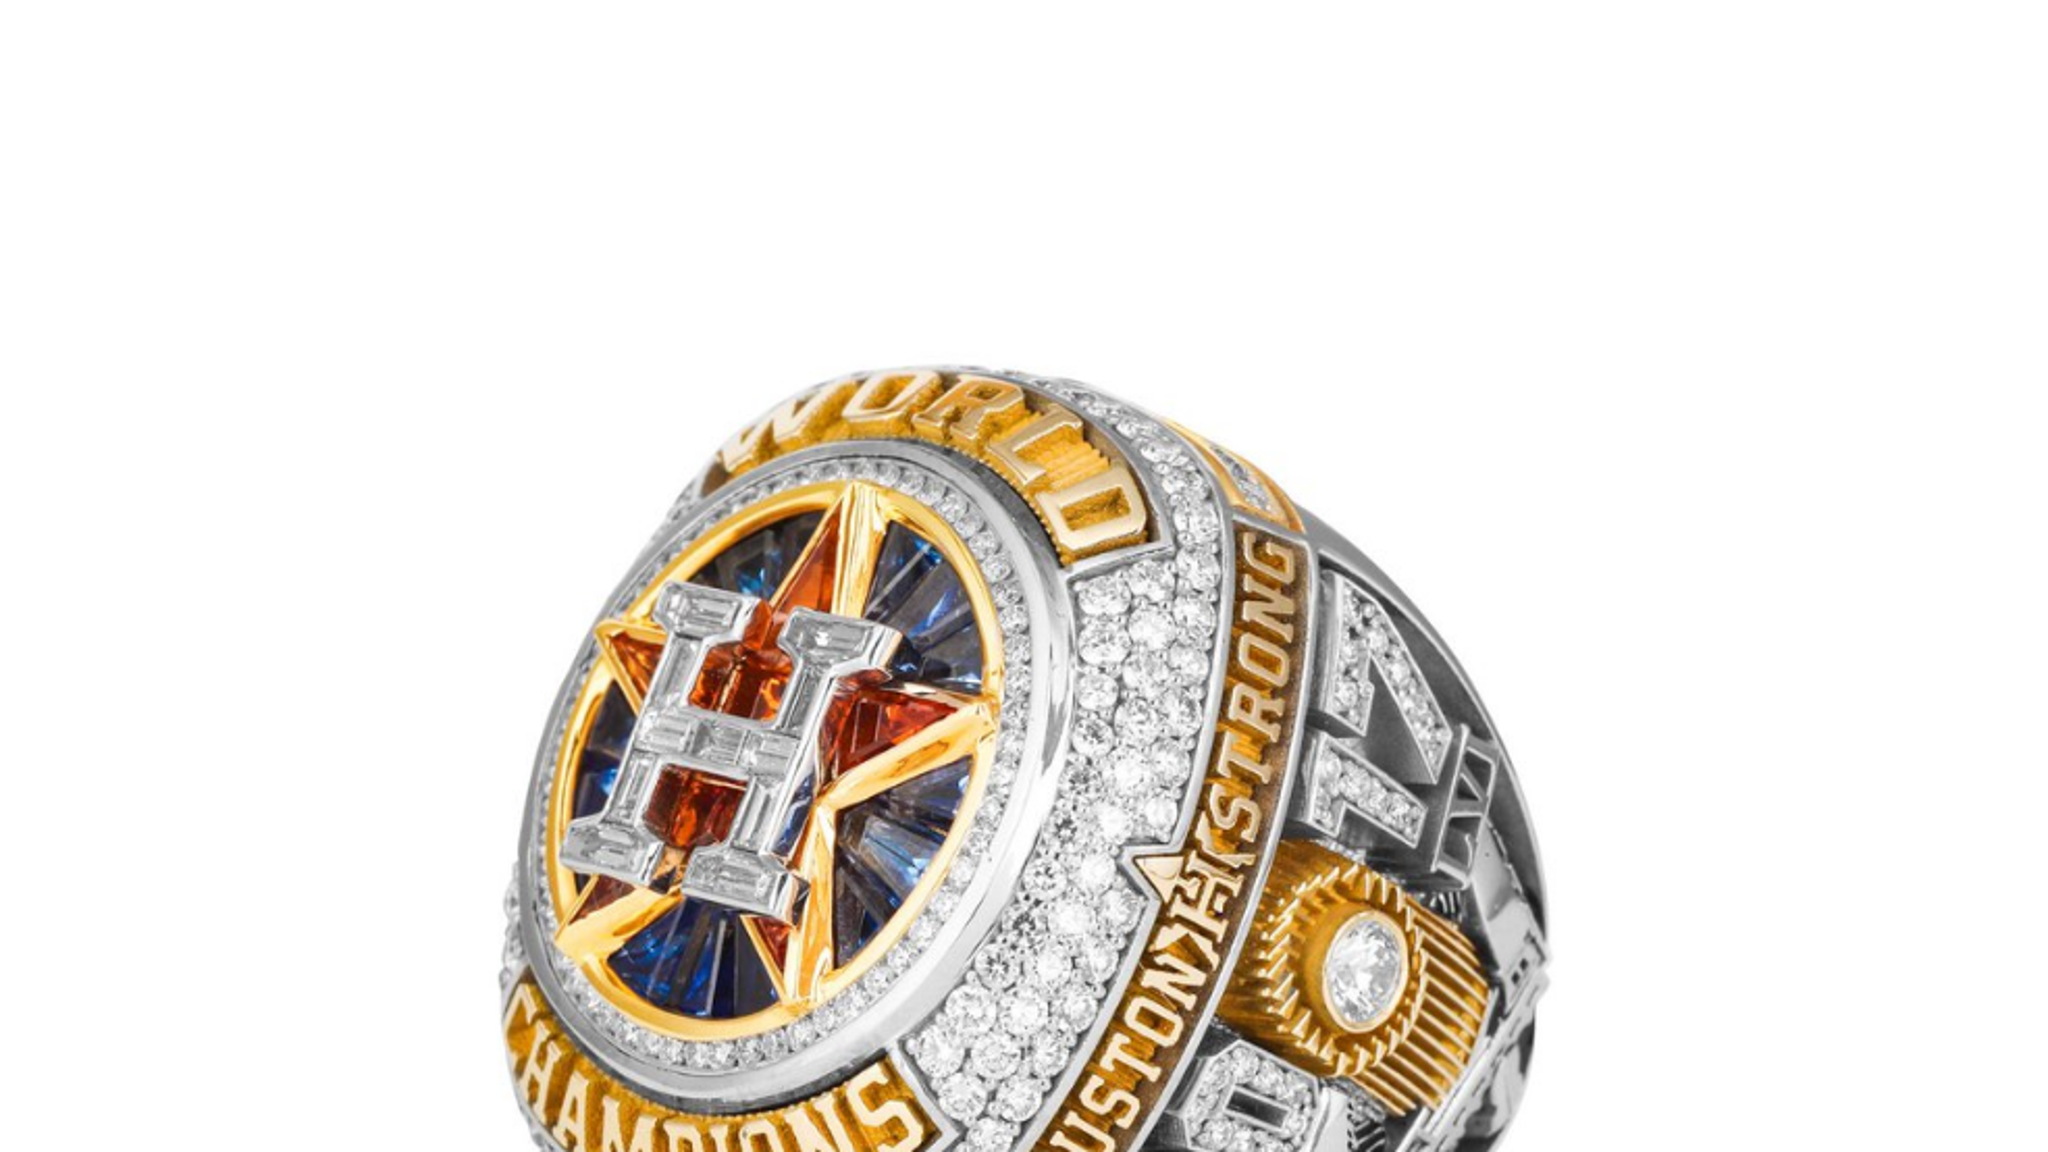 Houston Astros' World Champions Ring